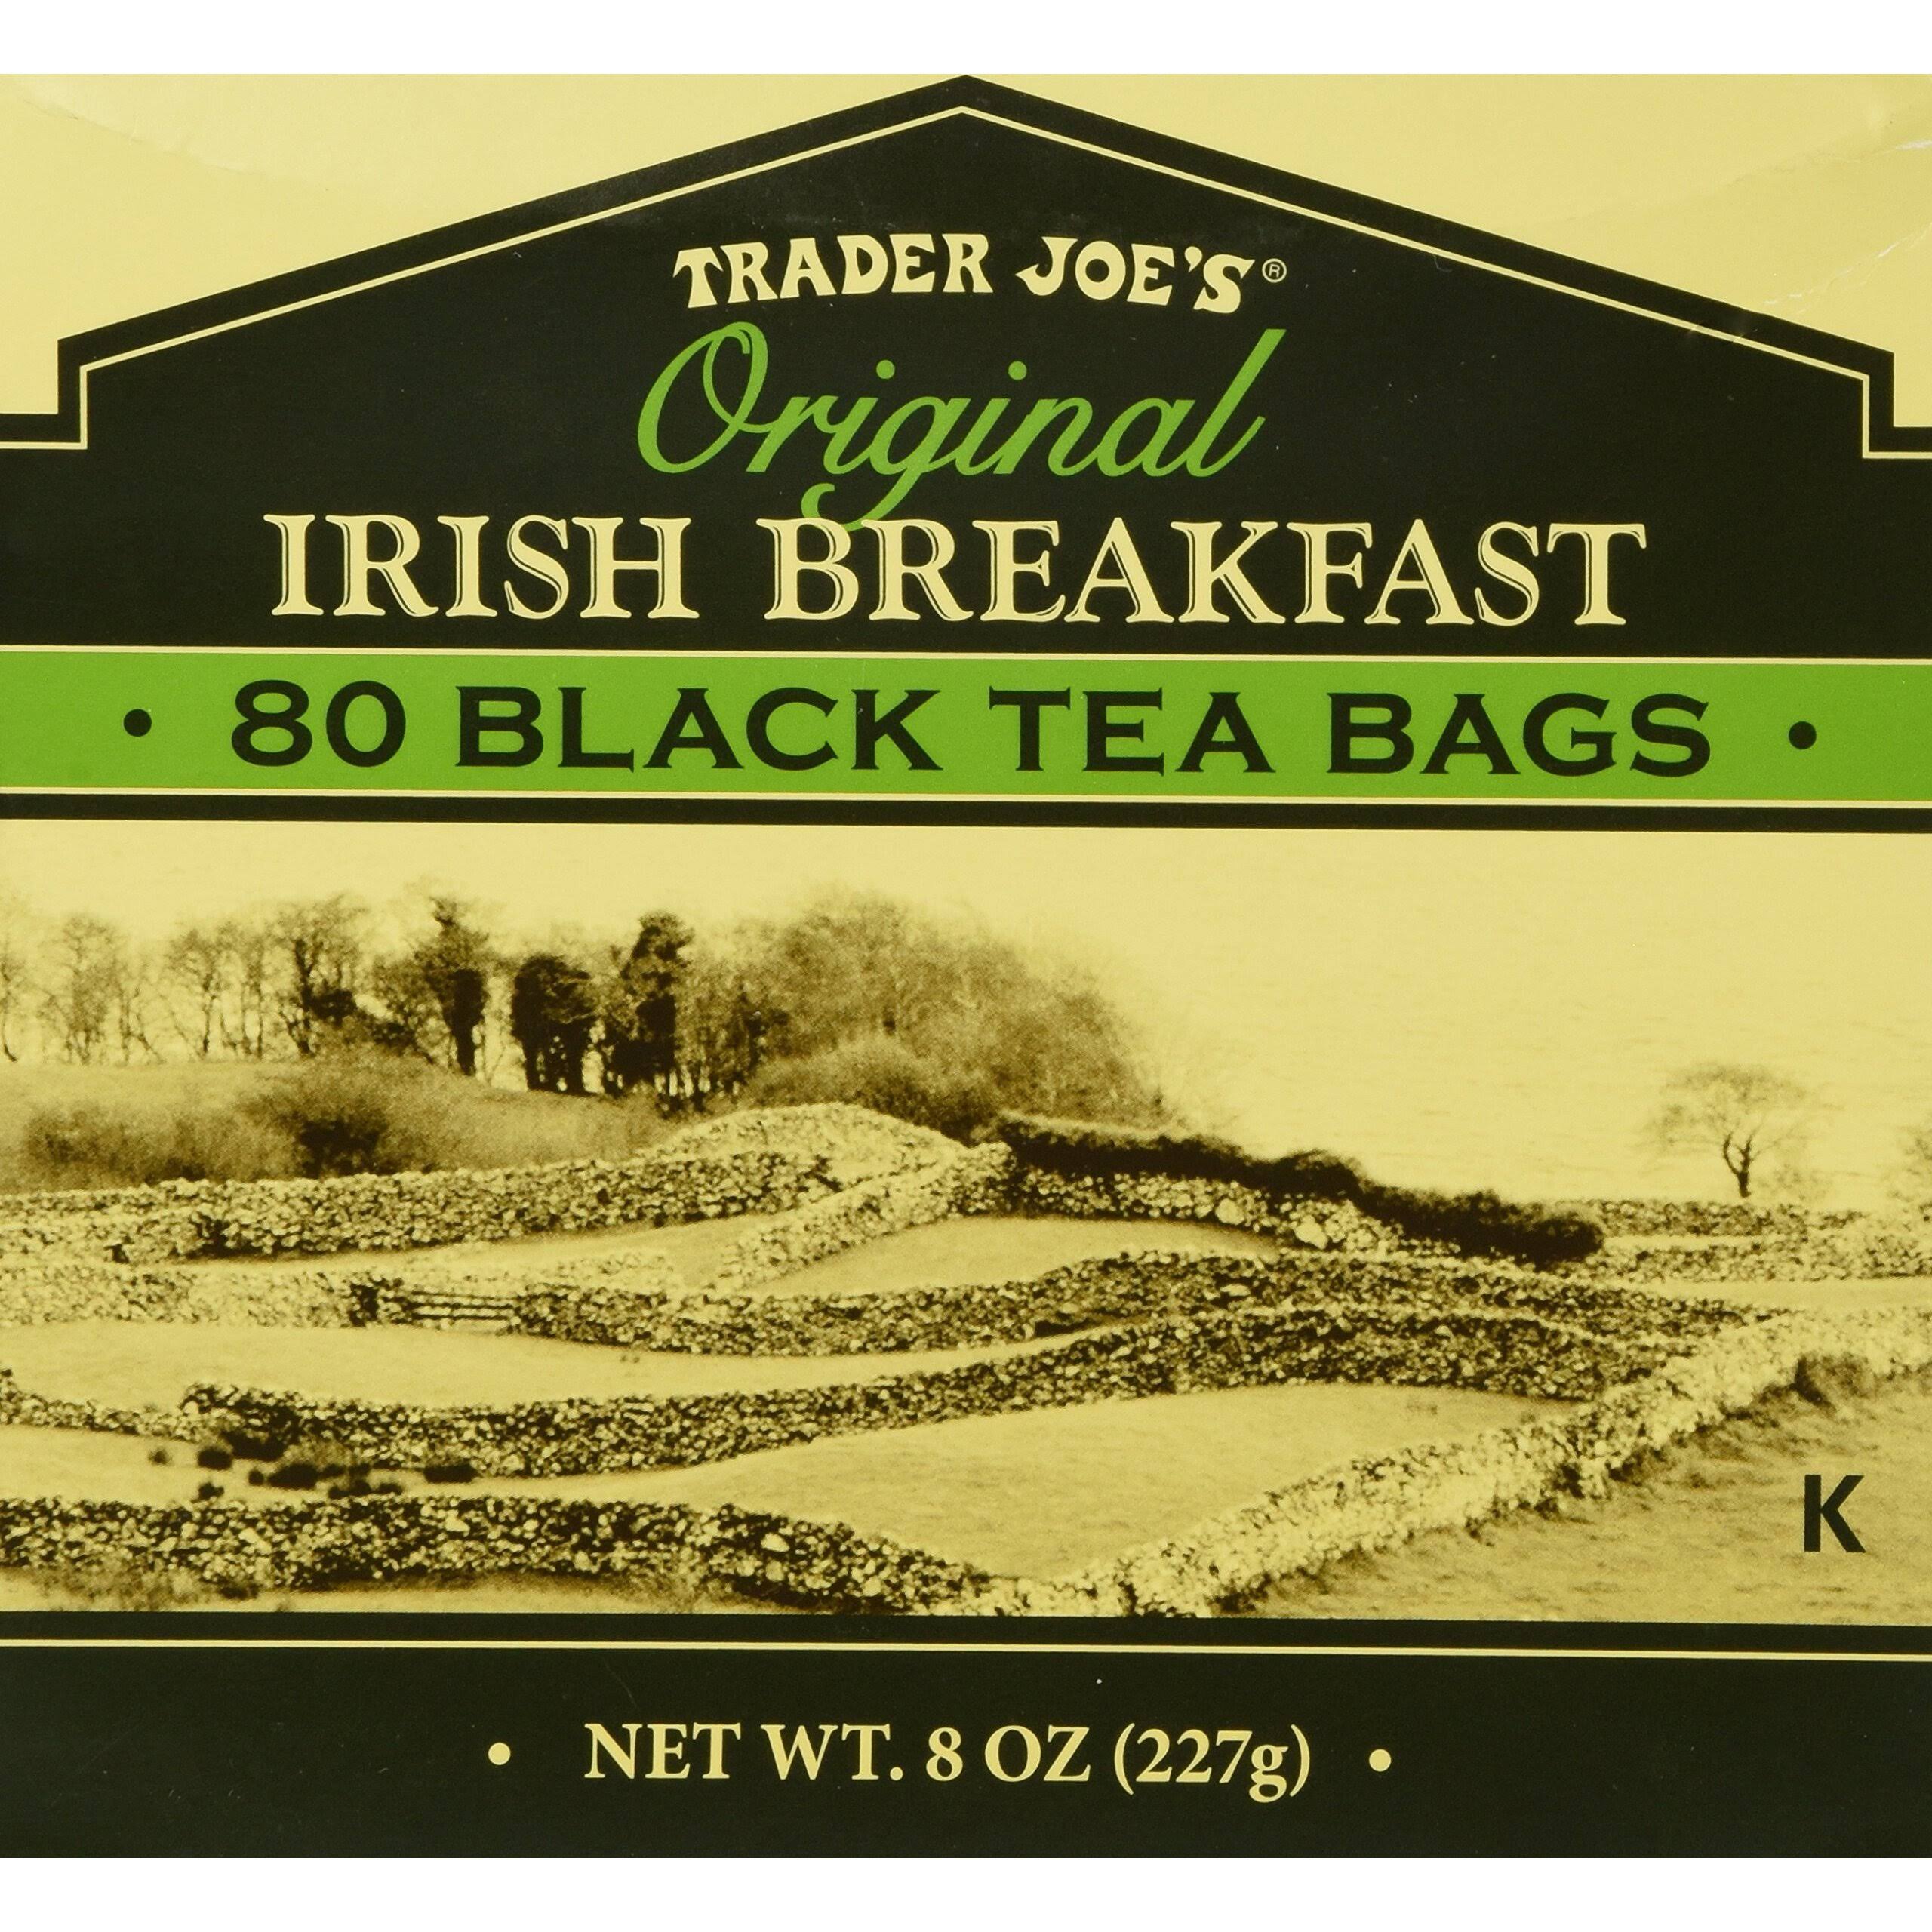 Trader Joe's Original Irish Breakfast Tea (80 Black Tea Bags Per Box)